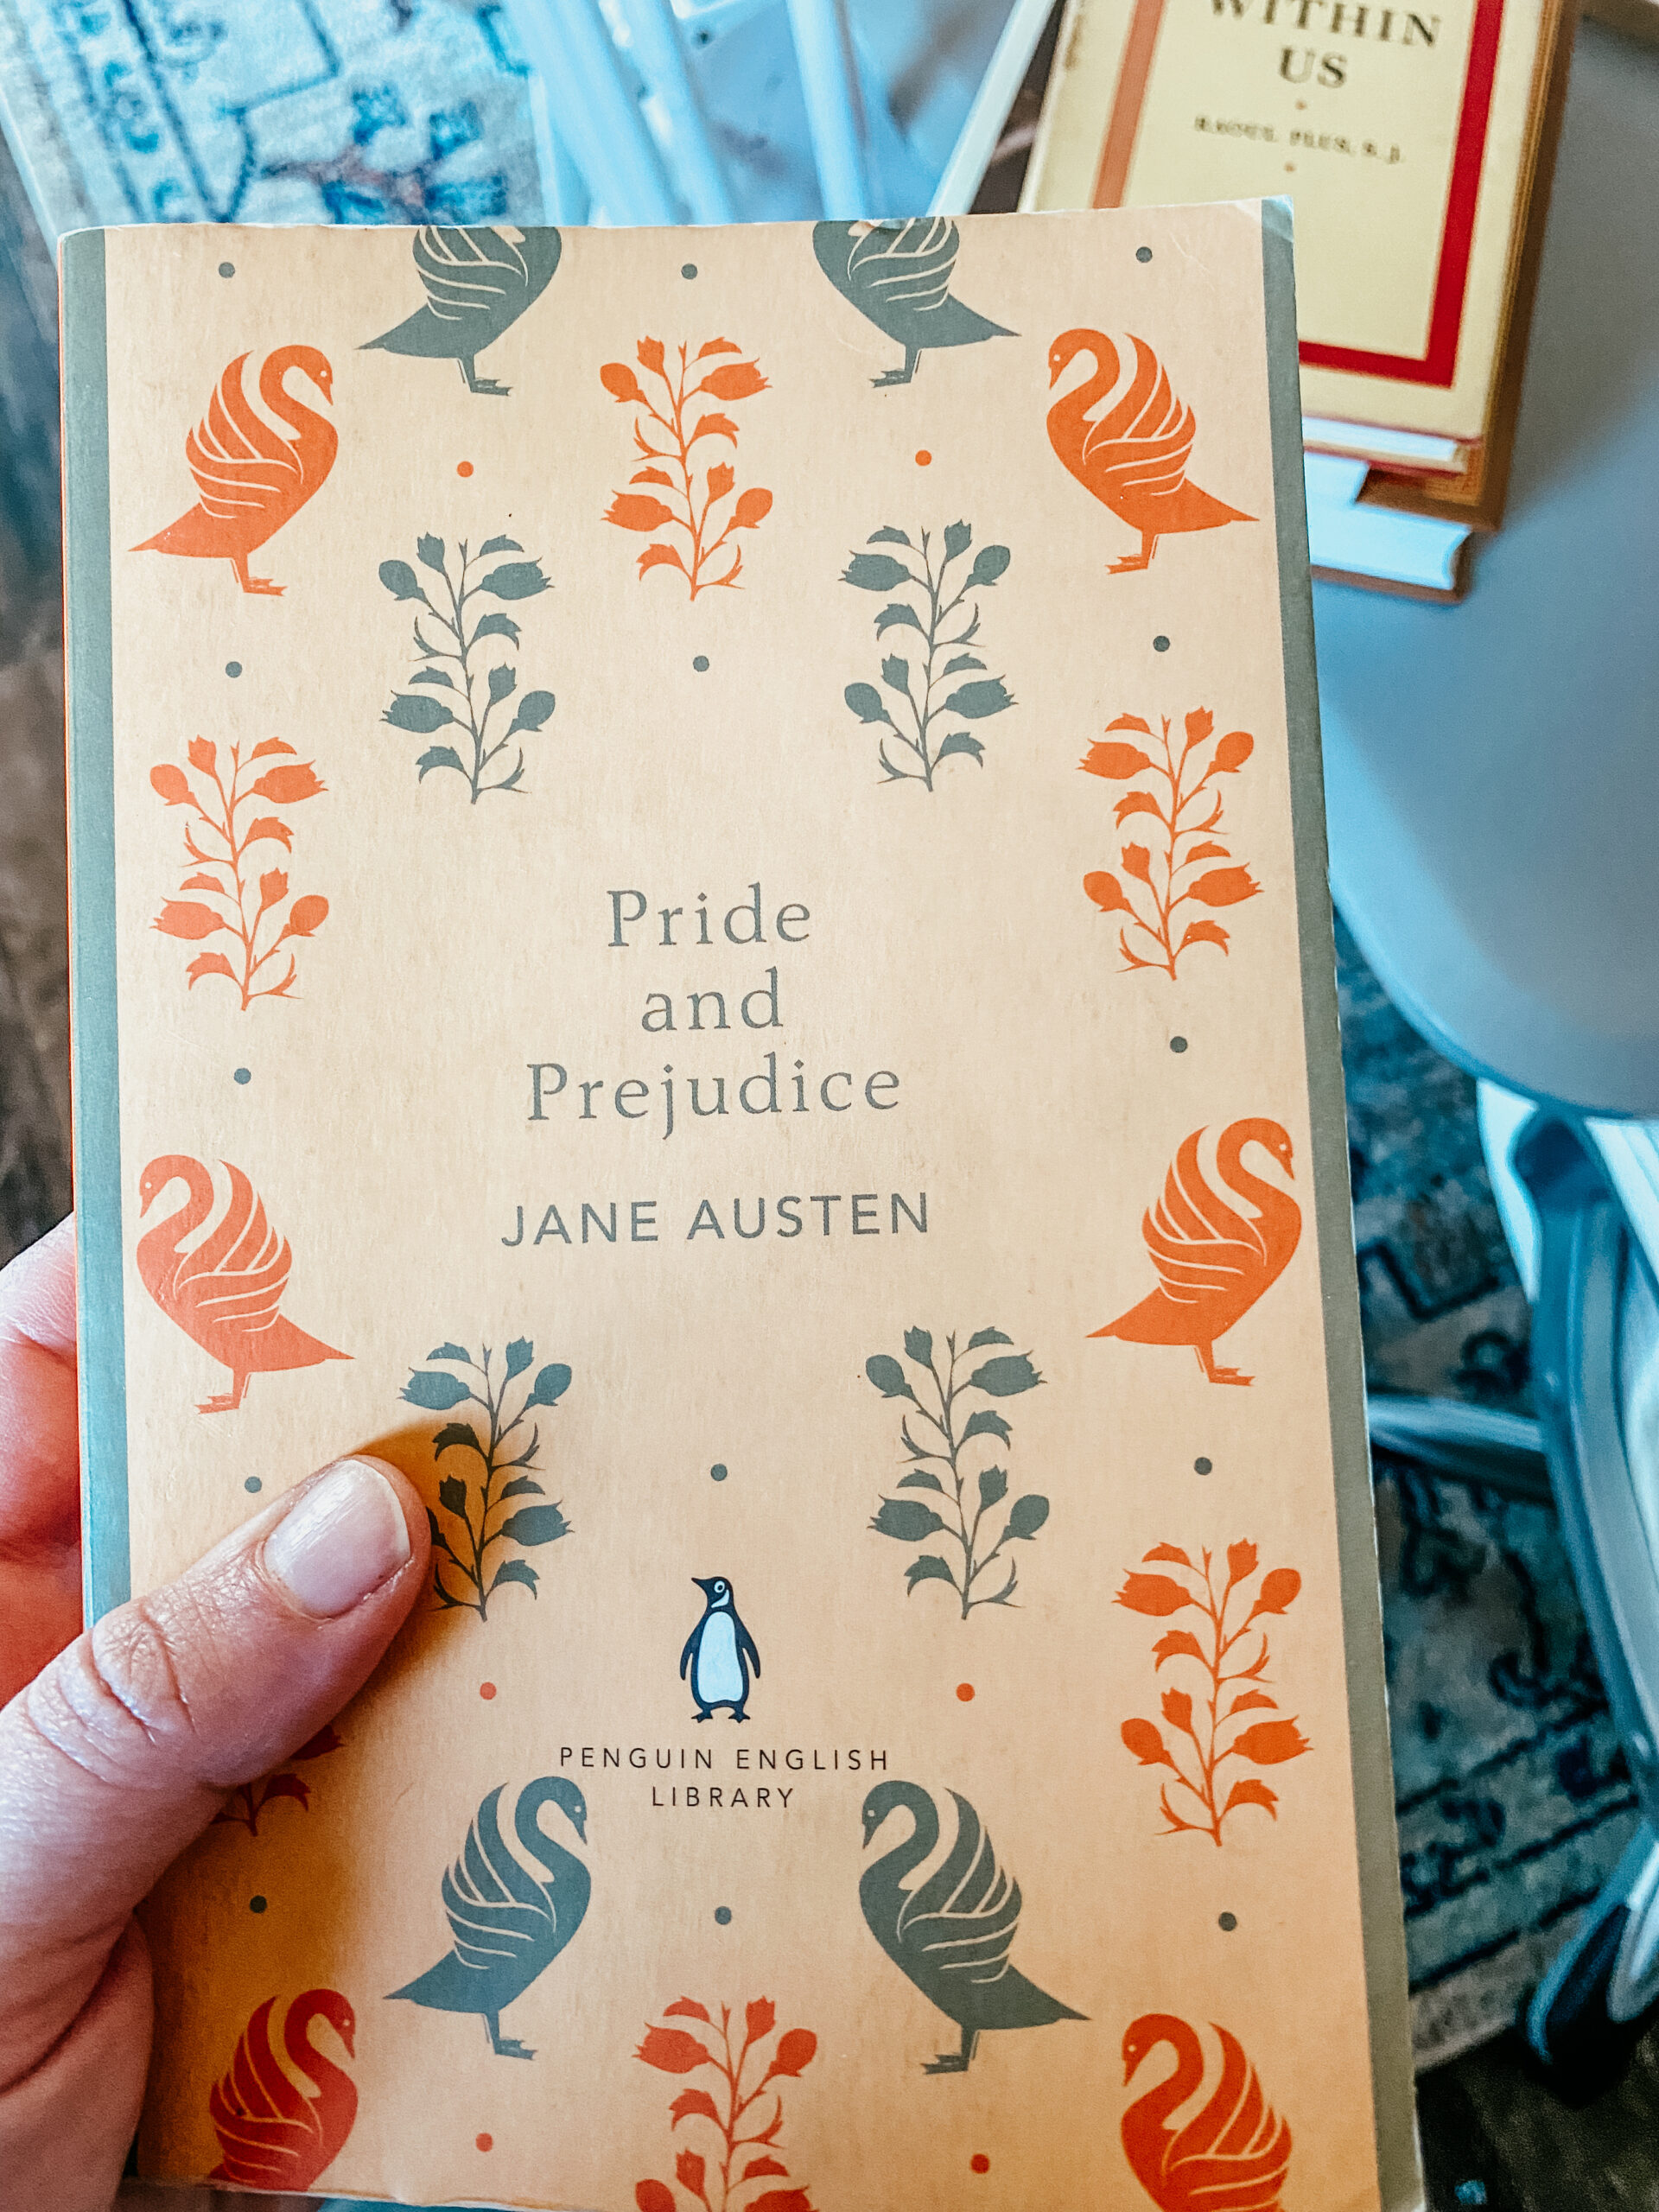 Pride and Prejudice book by Jane Austen.